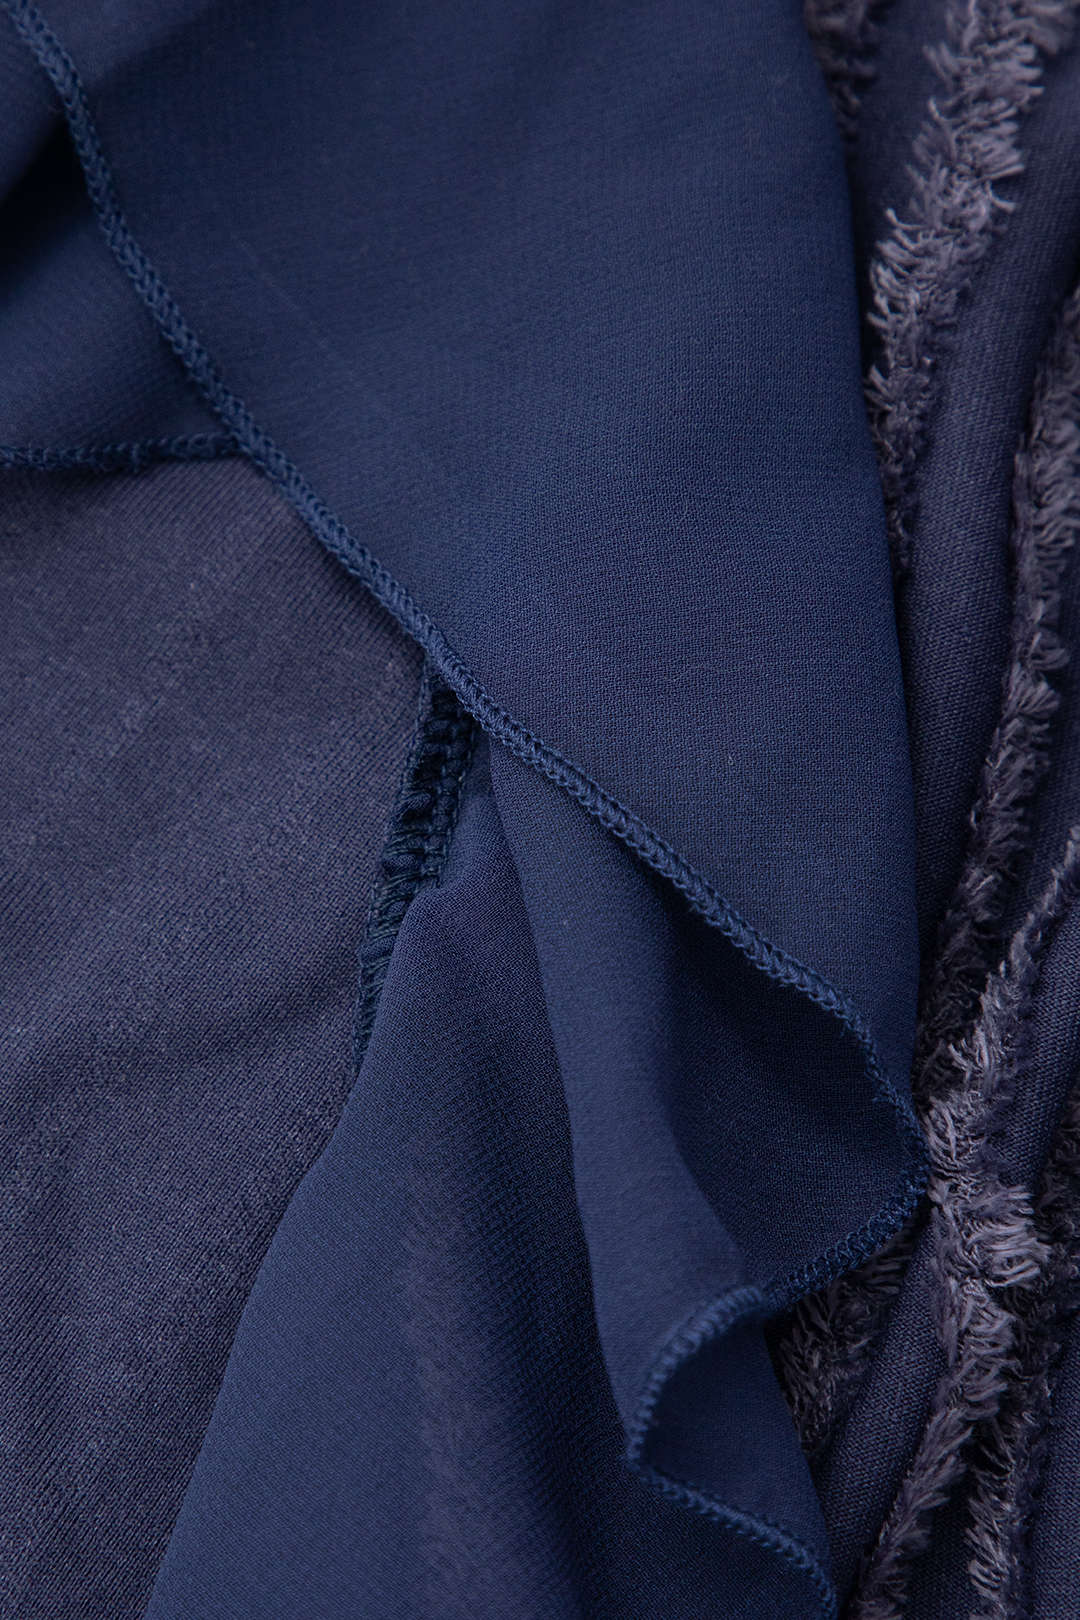 Frayed Detail Ruffle Strapless Maxi Dress